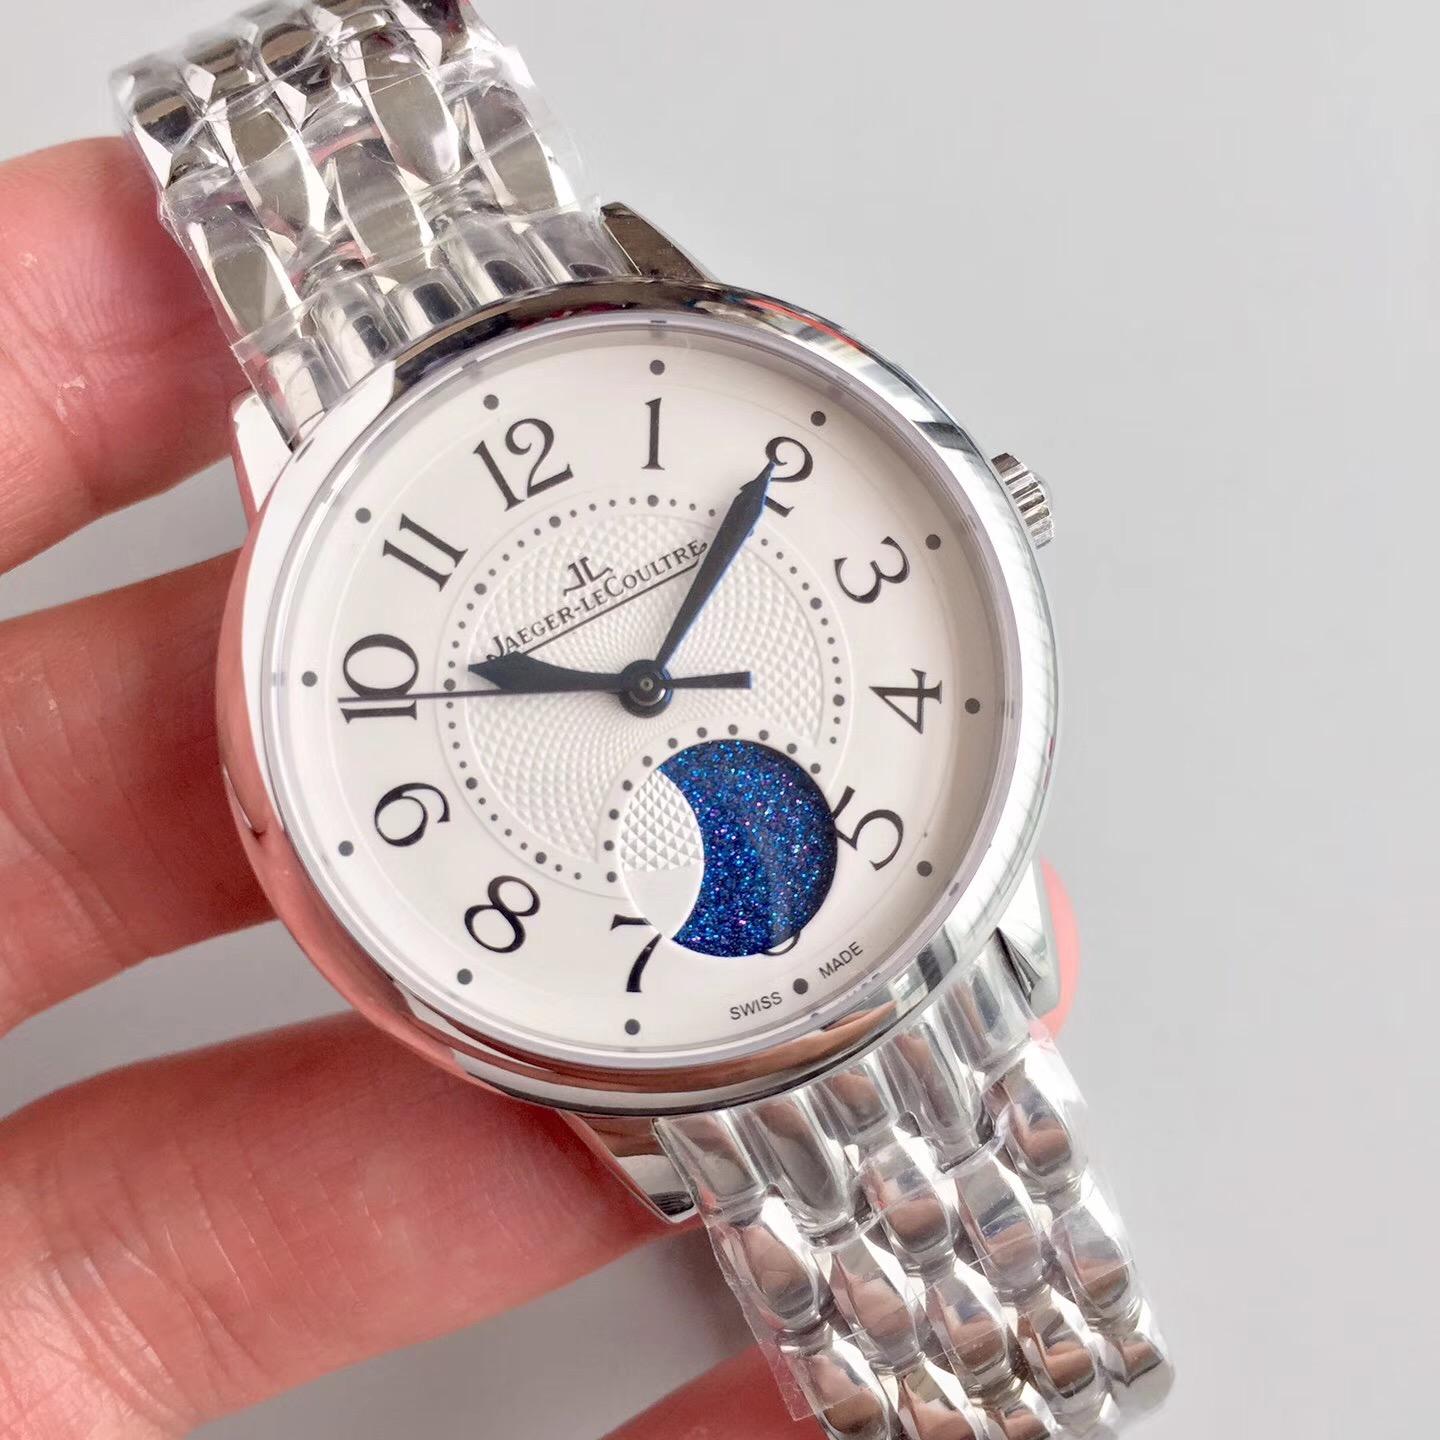 Jaeger-LeCoultre  積家 約會系列 日夜顯示腕錶 3468121 搭載進口9015−935A型自動上鏈機械機芯 實心316L不銹鋼錶殼